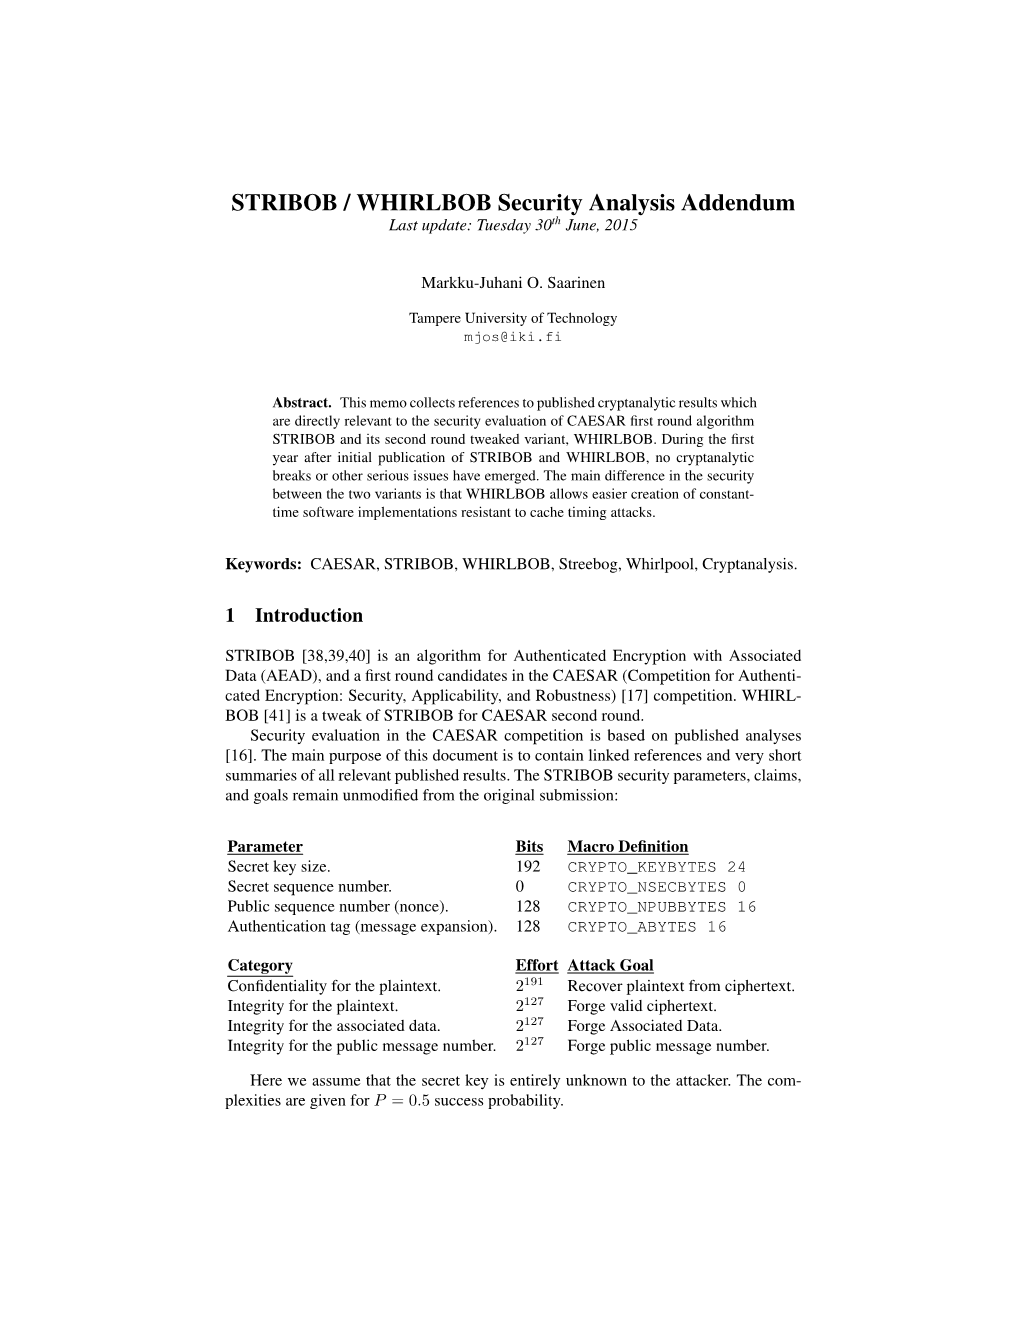 STRIBOB / WHIRLBOB Security Analysis Addendum Last Update: Tuesday 30Th June, 2015